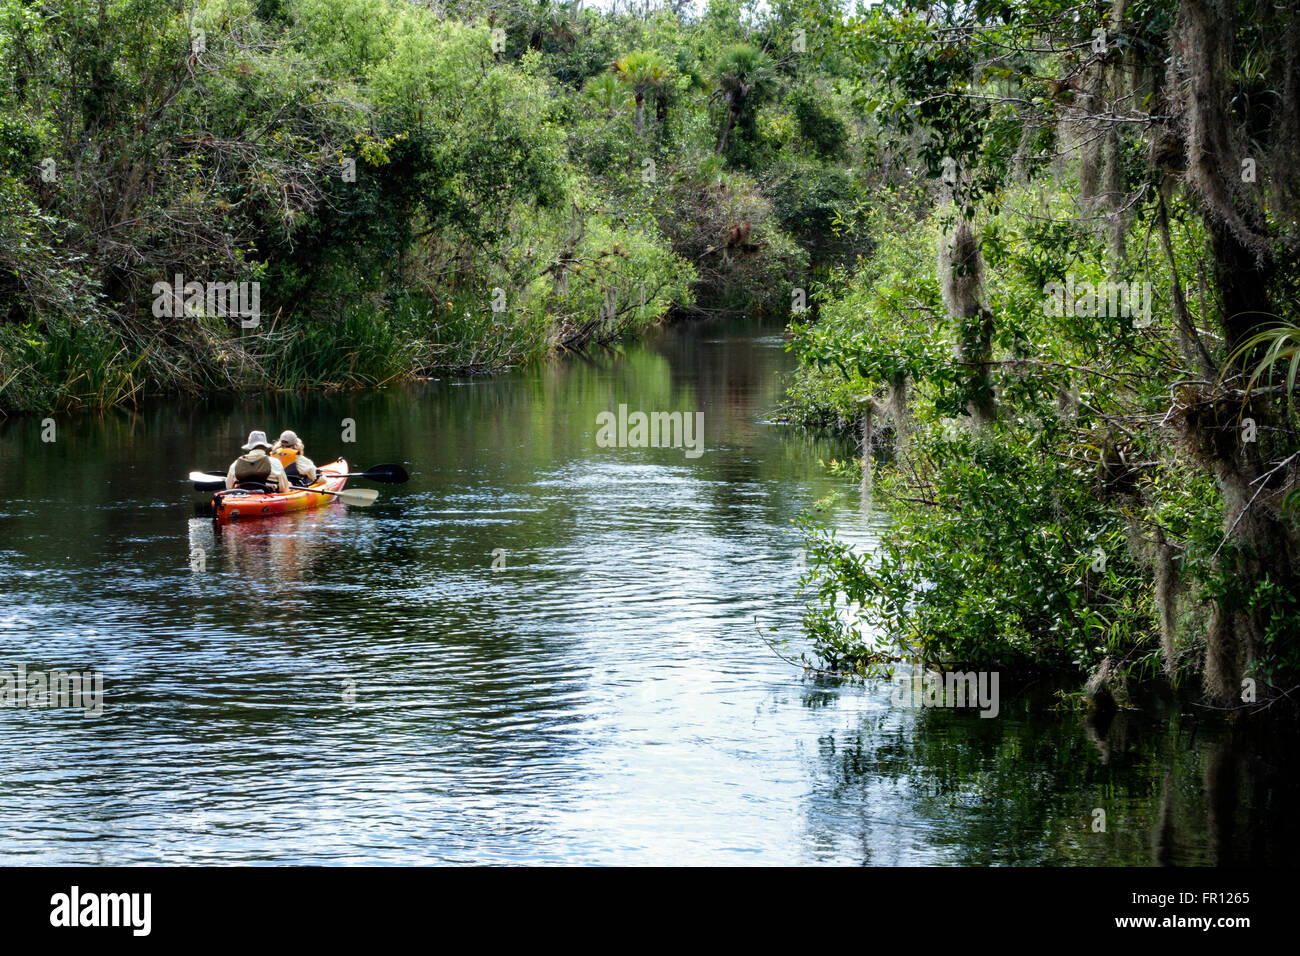 Florida Everglades, Parque Nacional Big Cypress, canoa, remo, adulto, adultos, hombre hombre varón, mujer mujer mujer, pareja, barco, agua, paisaje natural, FL Foto de stock